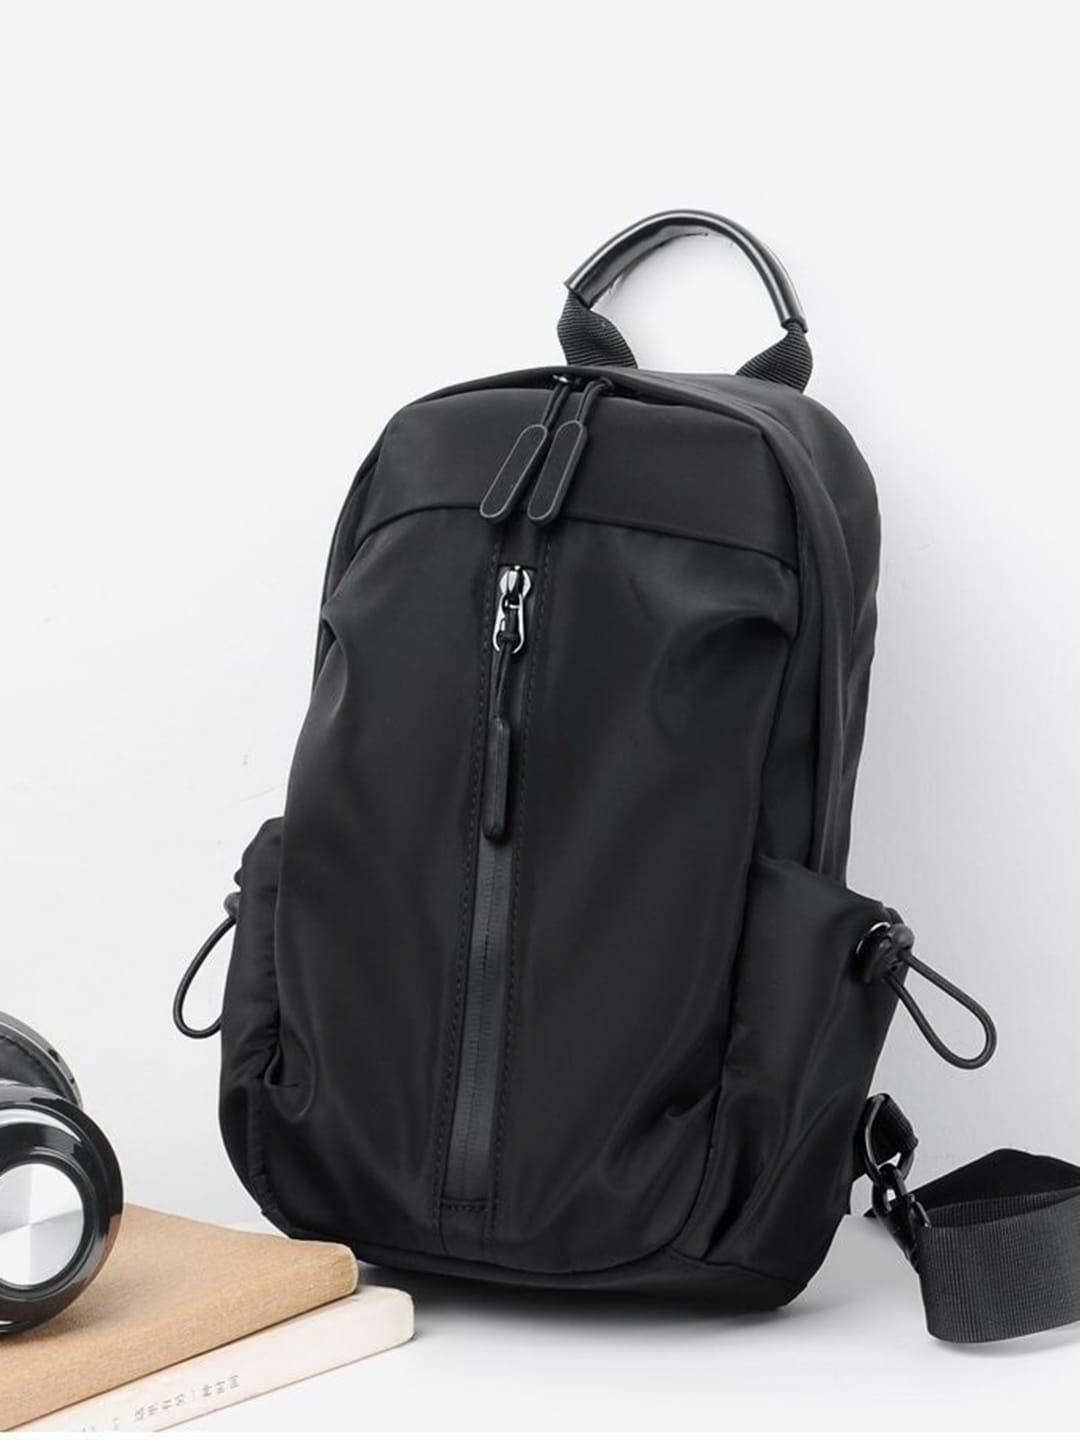 diva dale unisex black backpack with usb charging port